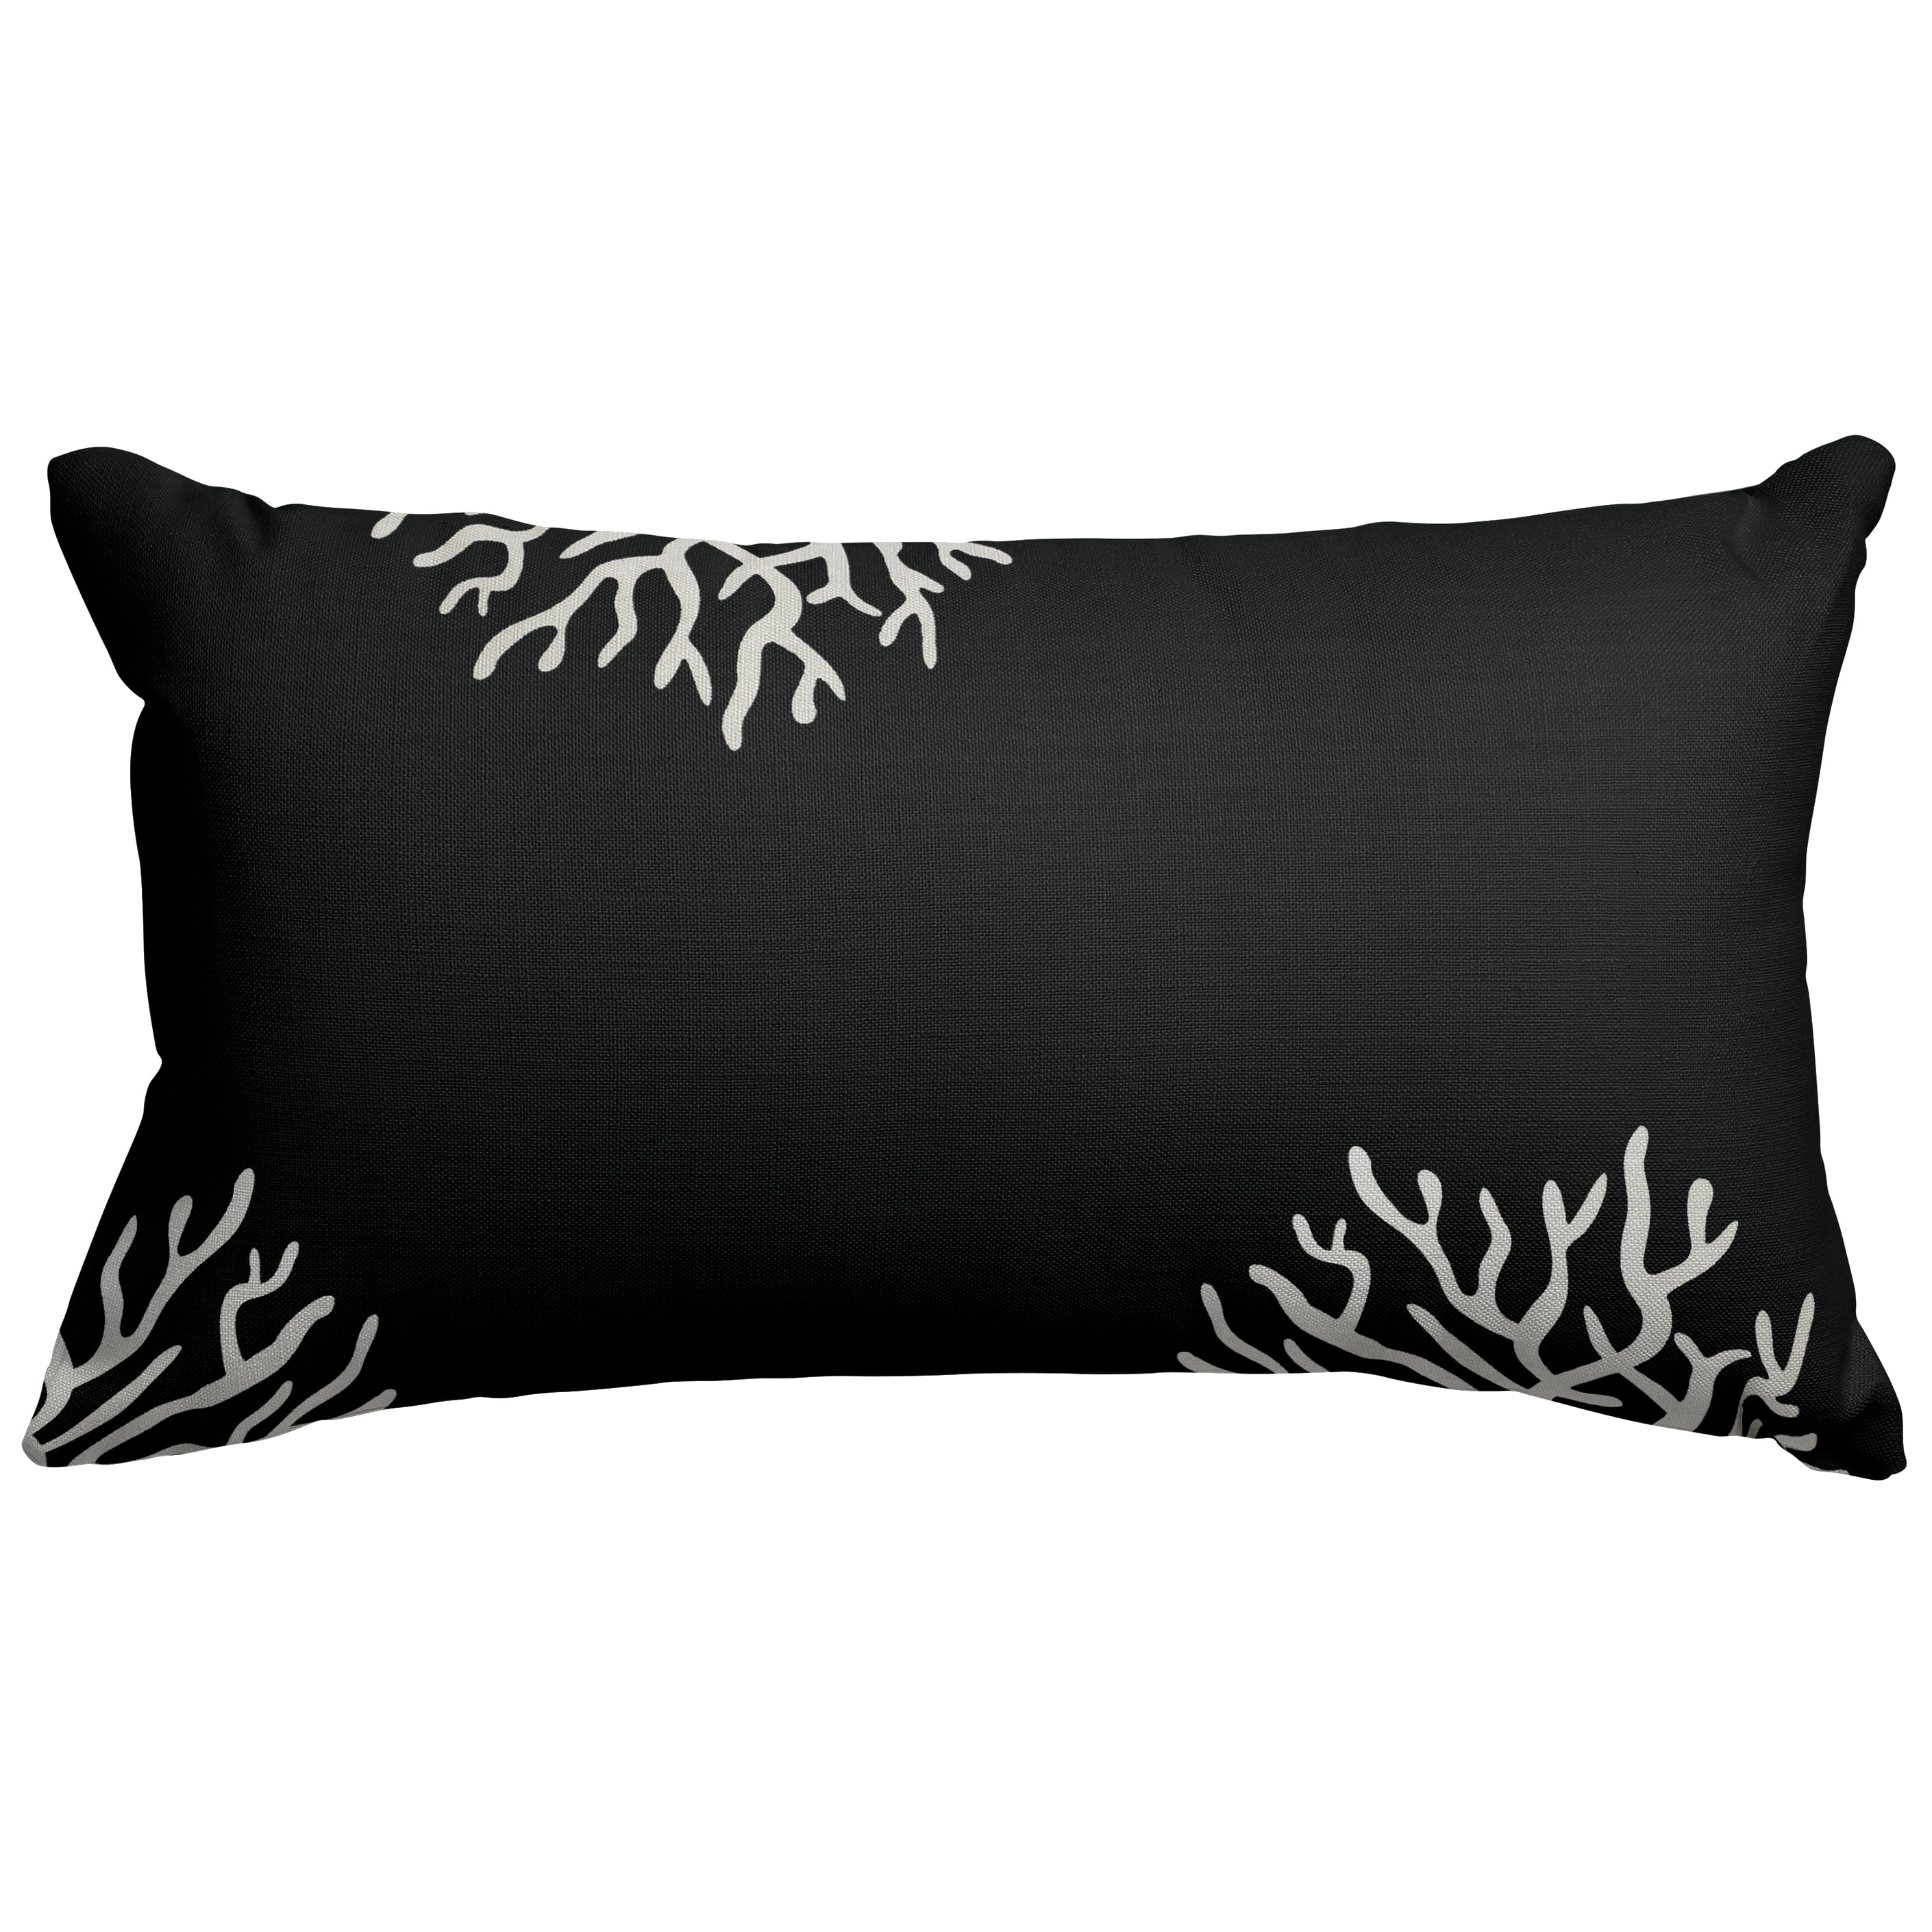 black and white outdoor pillows walmart